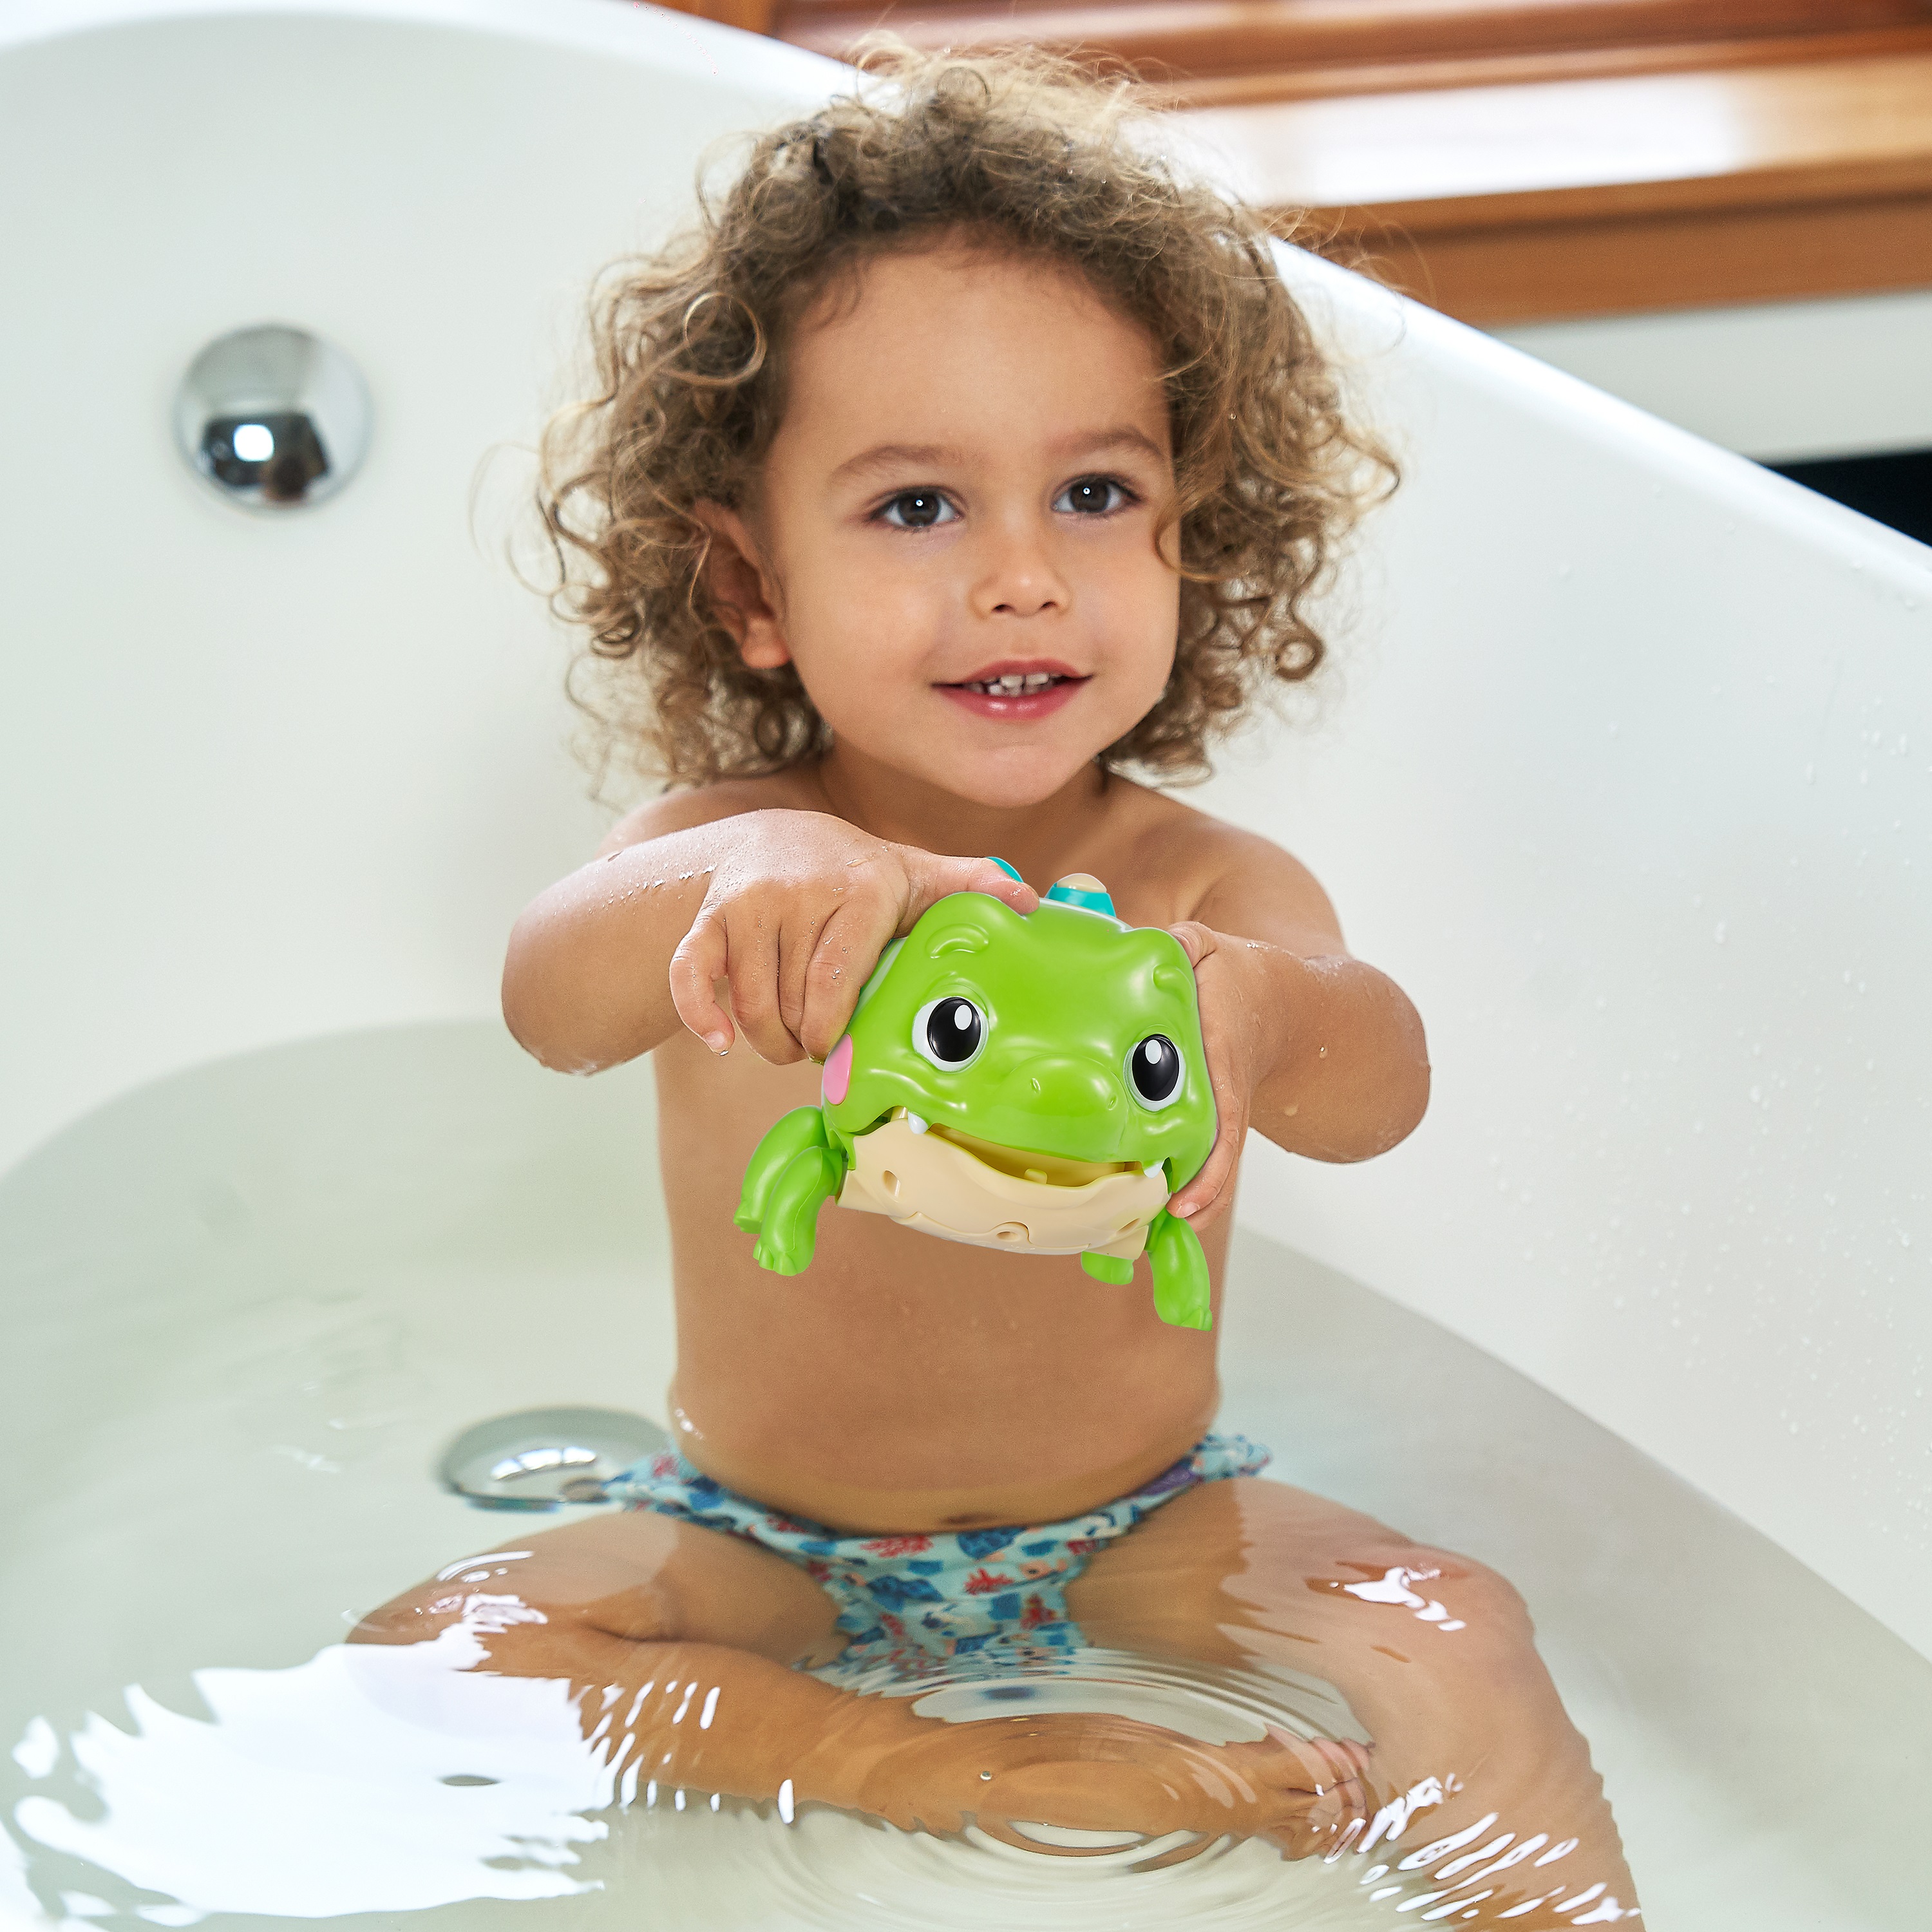 Robo Alive Junior Little Croc 5 Inch Battery-Powered Bath Toy by ZURU - image 2 of 7